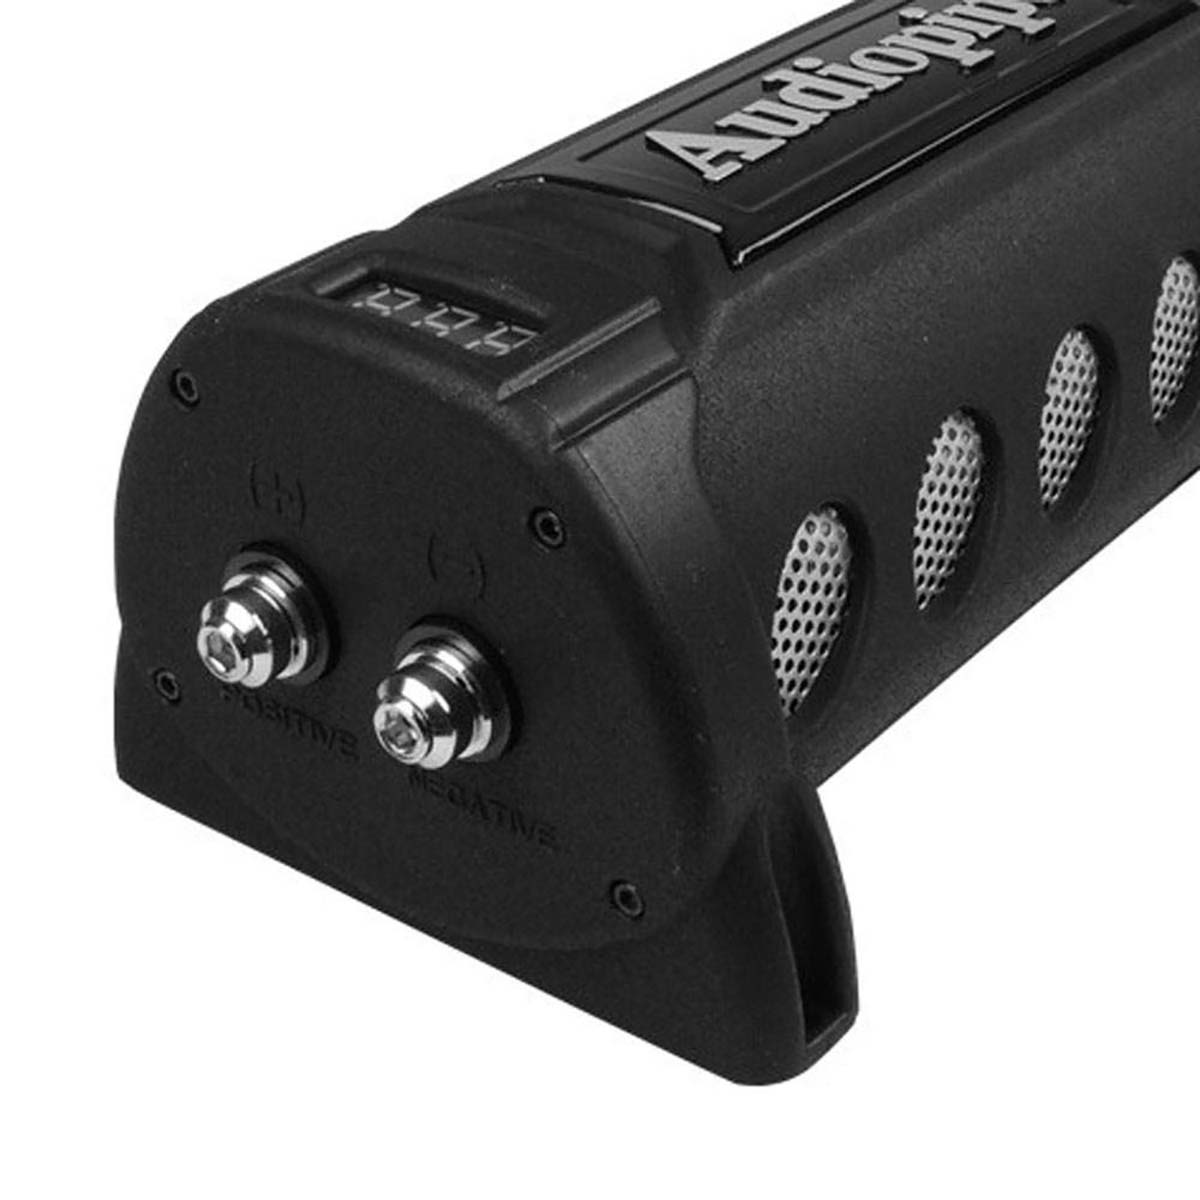 New Audiopipe ACAP-6000 6 Farad Power Car Audio Capacitor Digital Display Black